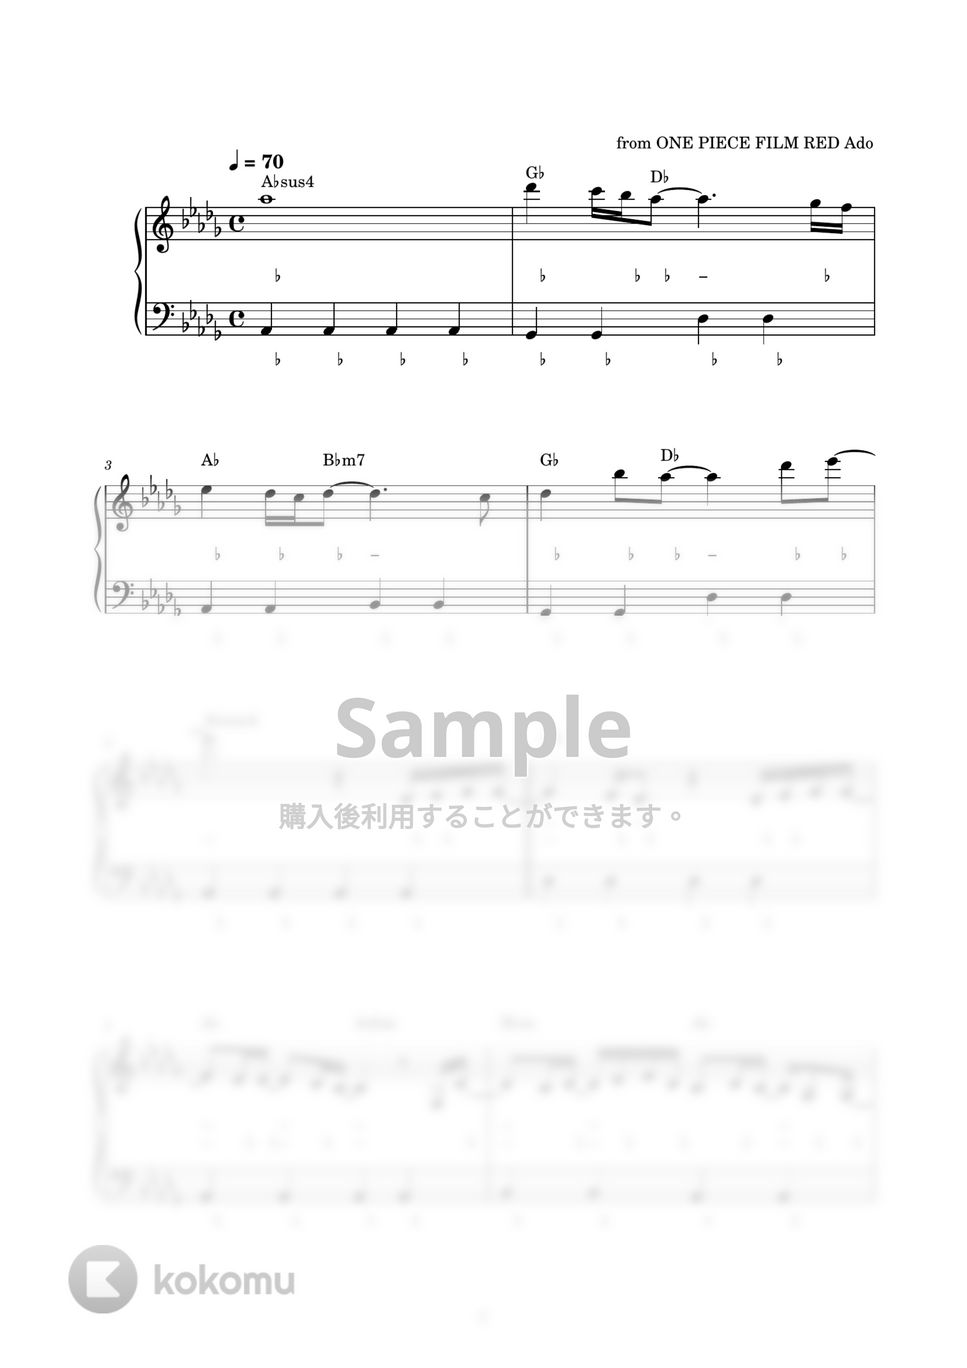 Ado - 風のゆくえ  (ウタ from ONE PIECE FILM RED) (ピアノ楽譜 / かんたん両手 / 歌詞付き / ドレミ付き / 初心者向き) by piano.tokyo